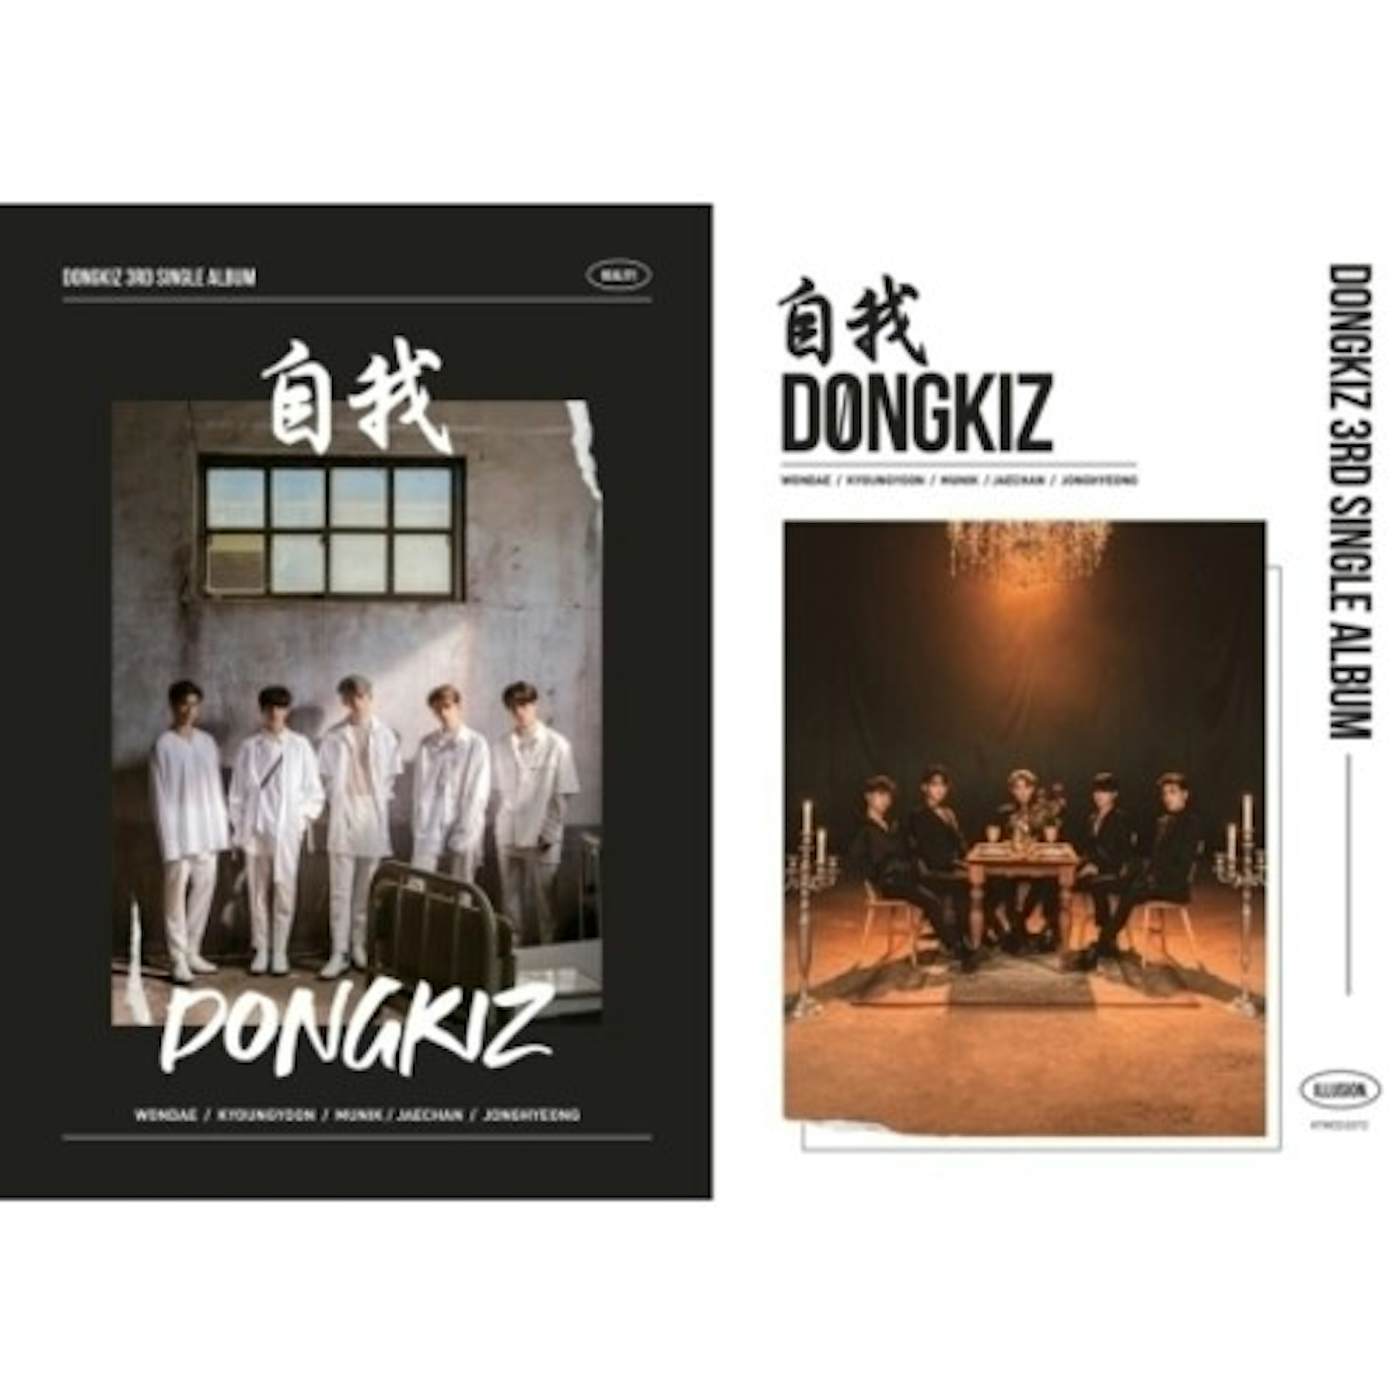 DONGKIZ 3RD SINGLE ALBUM (RANDOM COVER) CD